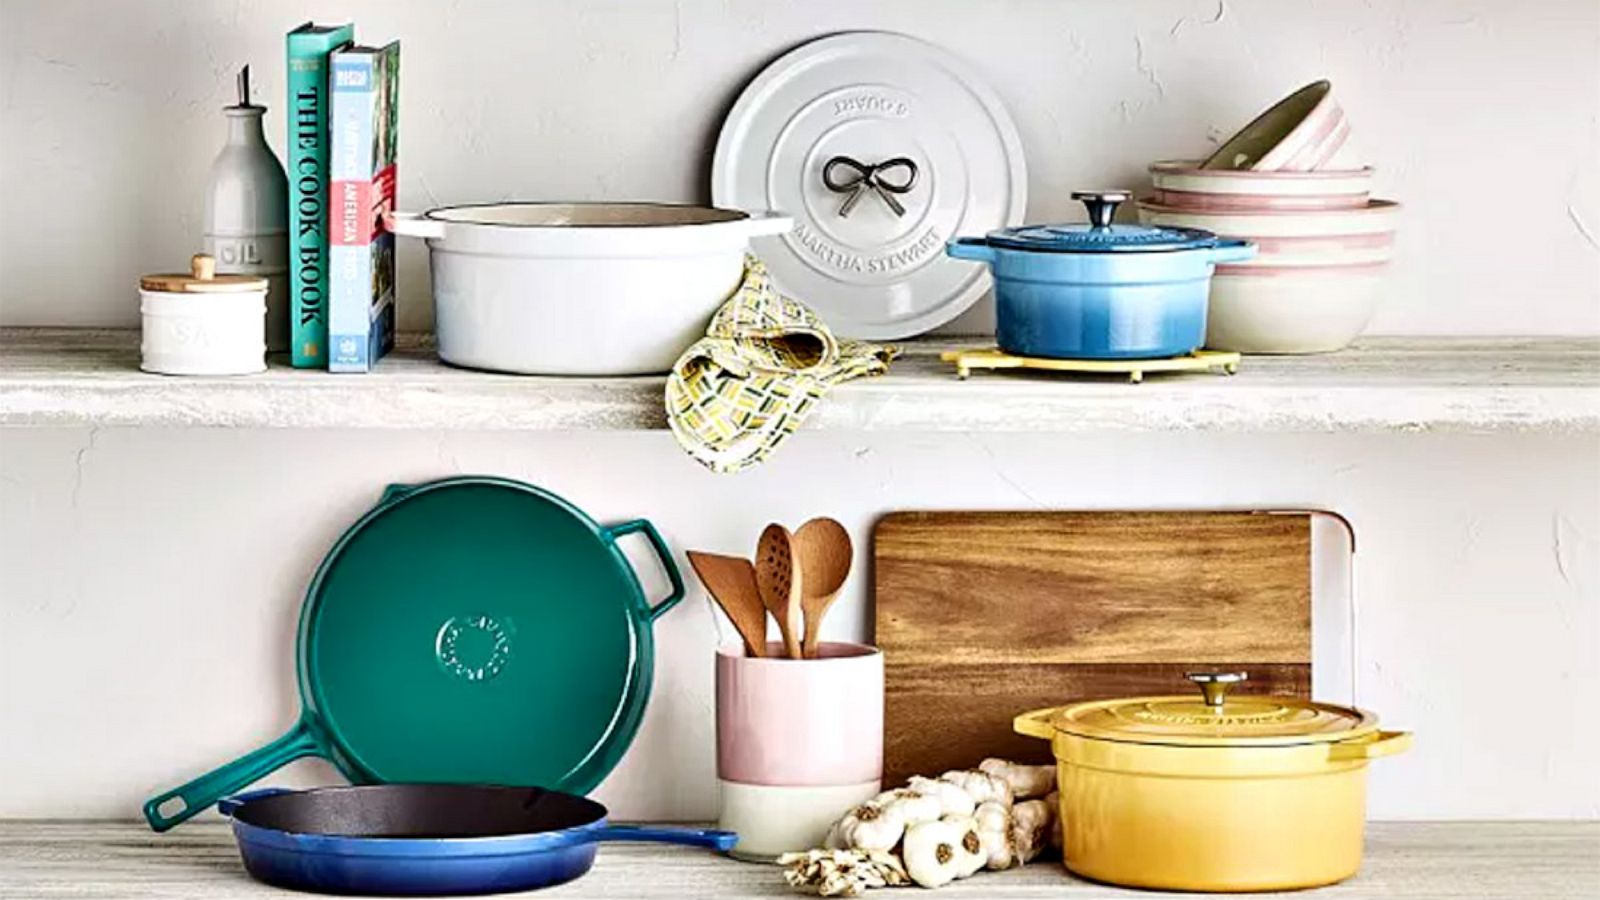 Macy's Recalls Martha Stewart Stainless Steel Cookware